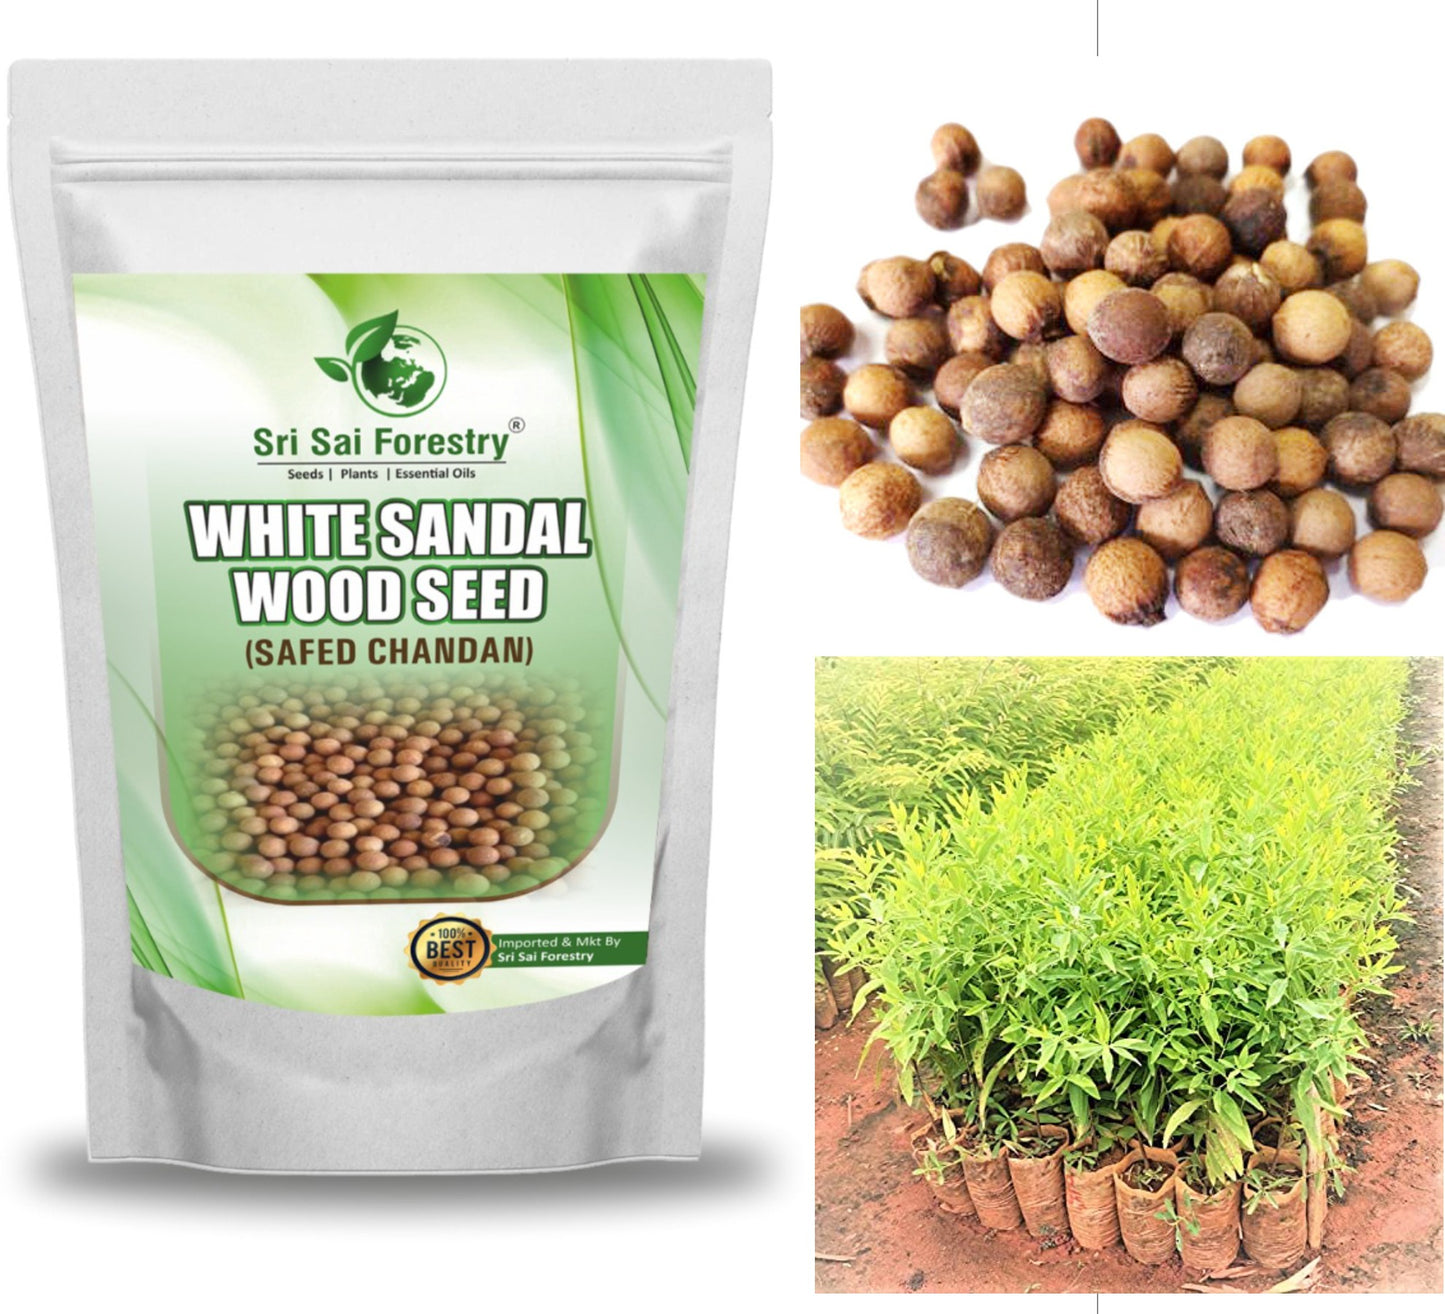 White Sandalwood Seeds for Planting, Safed Chandan Tree Seeds